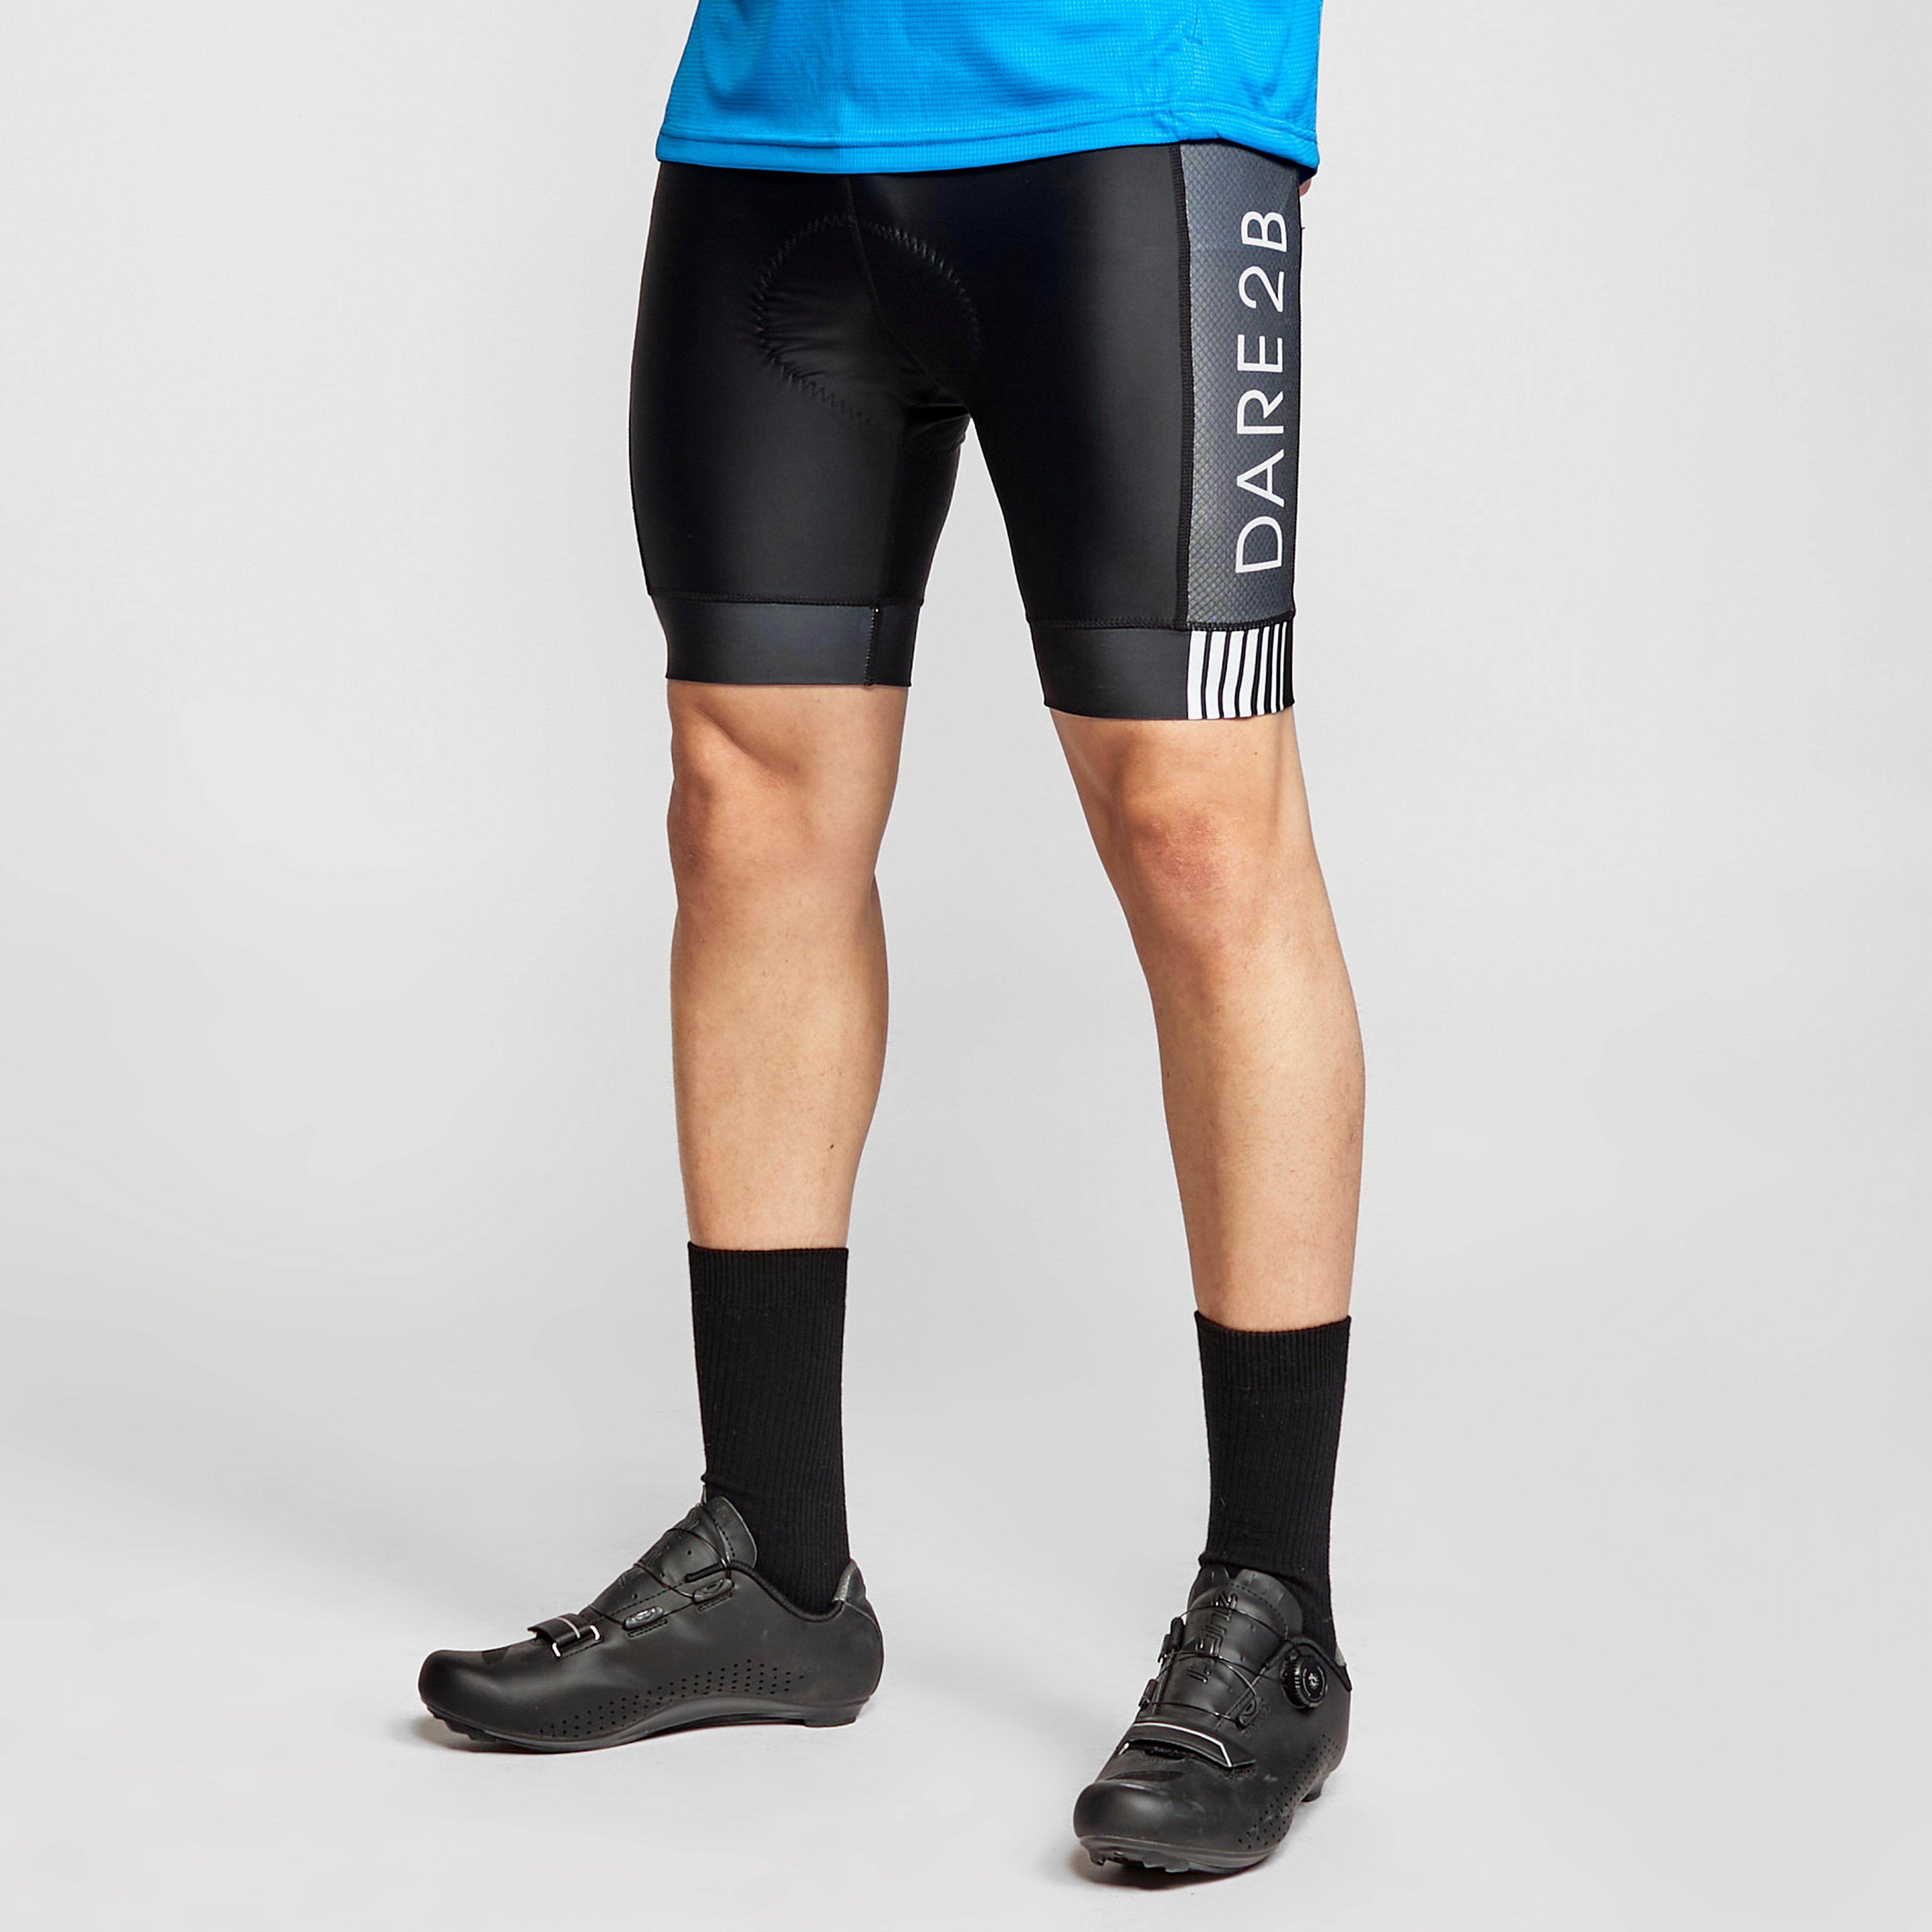 Image of Dare 2B Men's Virtuosity Quick-Drying Cycling Shorts - Black/Blk, Black/BLK